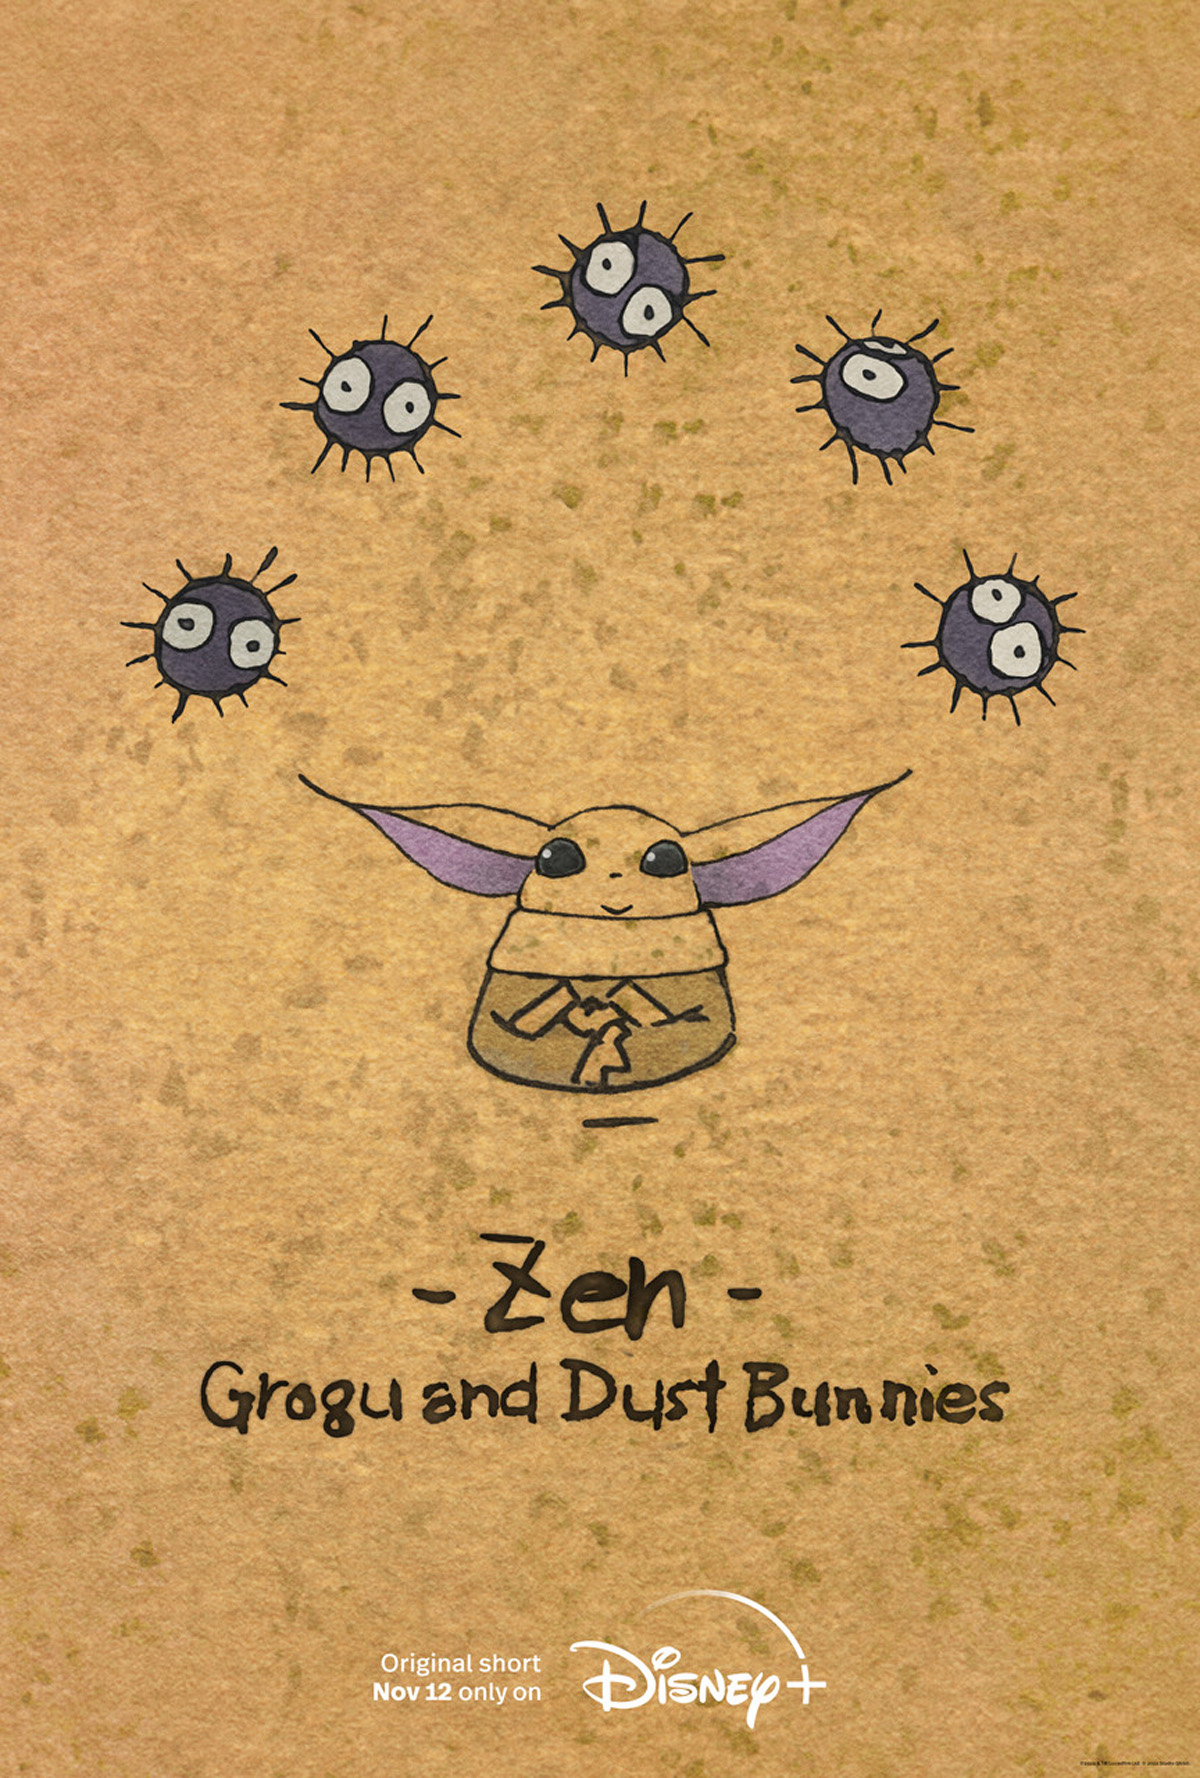 Main image of the Zen animated short - Grogu and Dust Bunnies. 